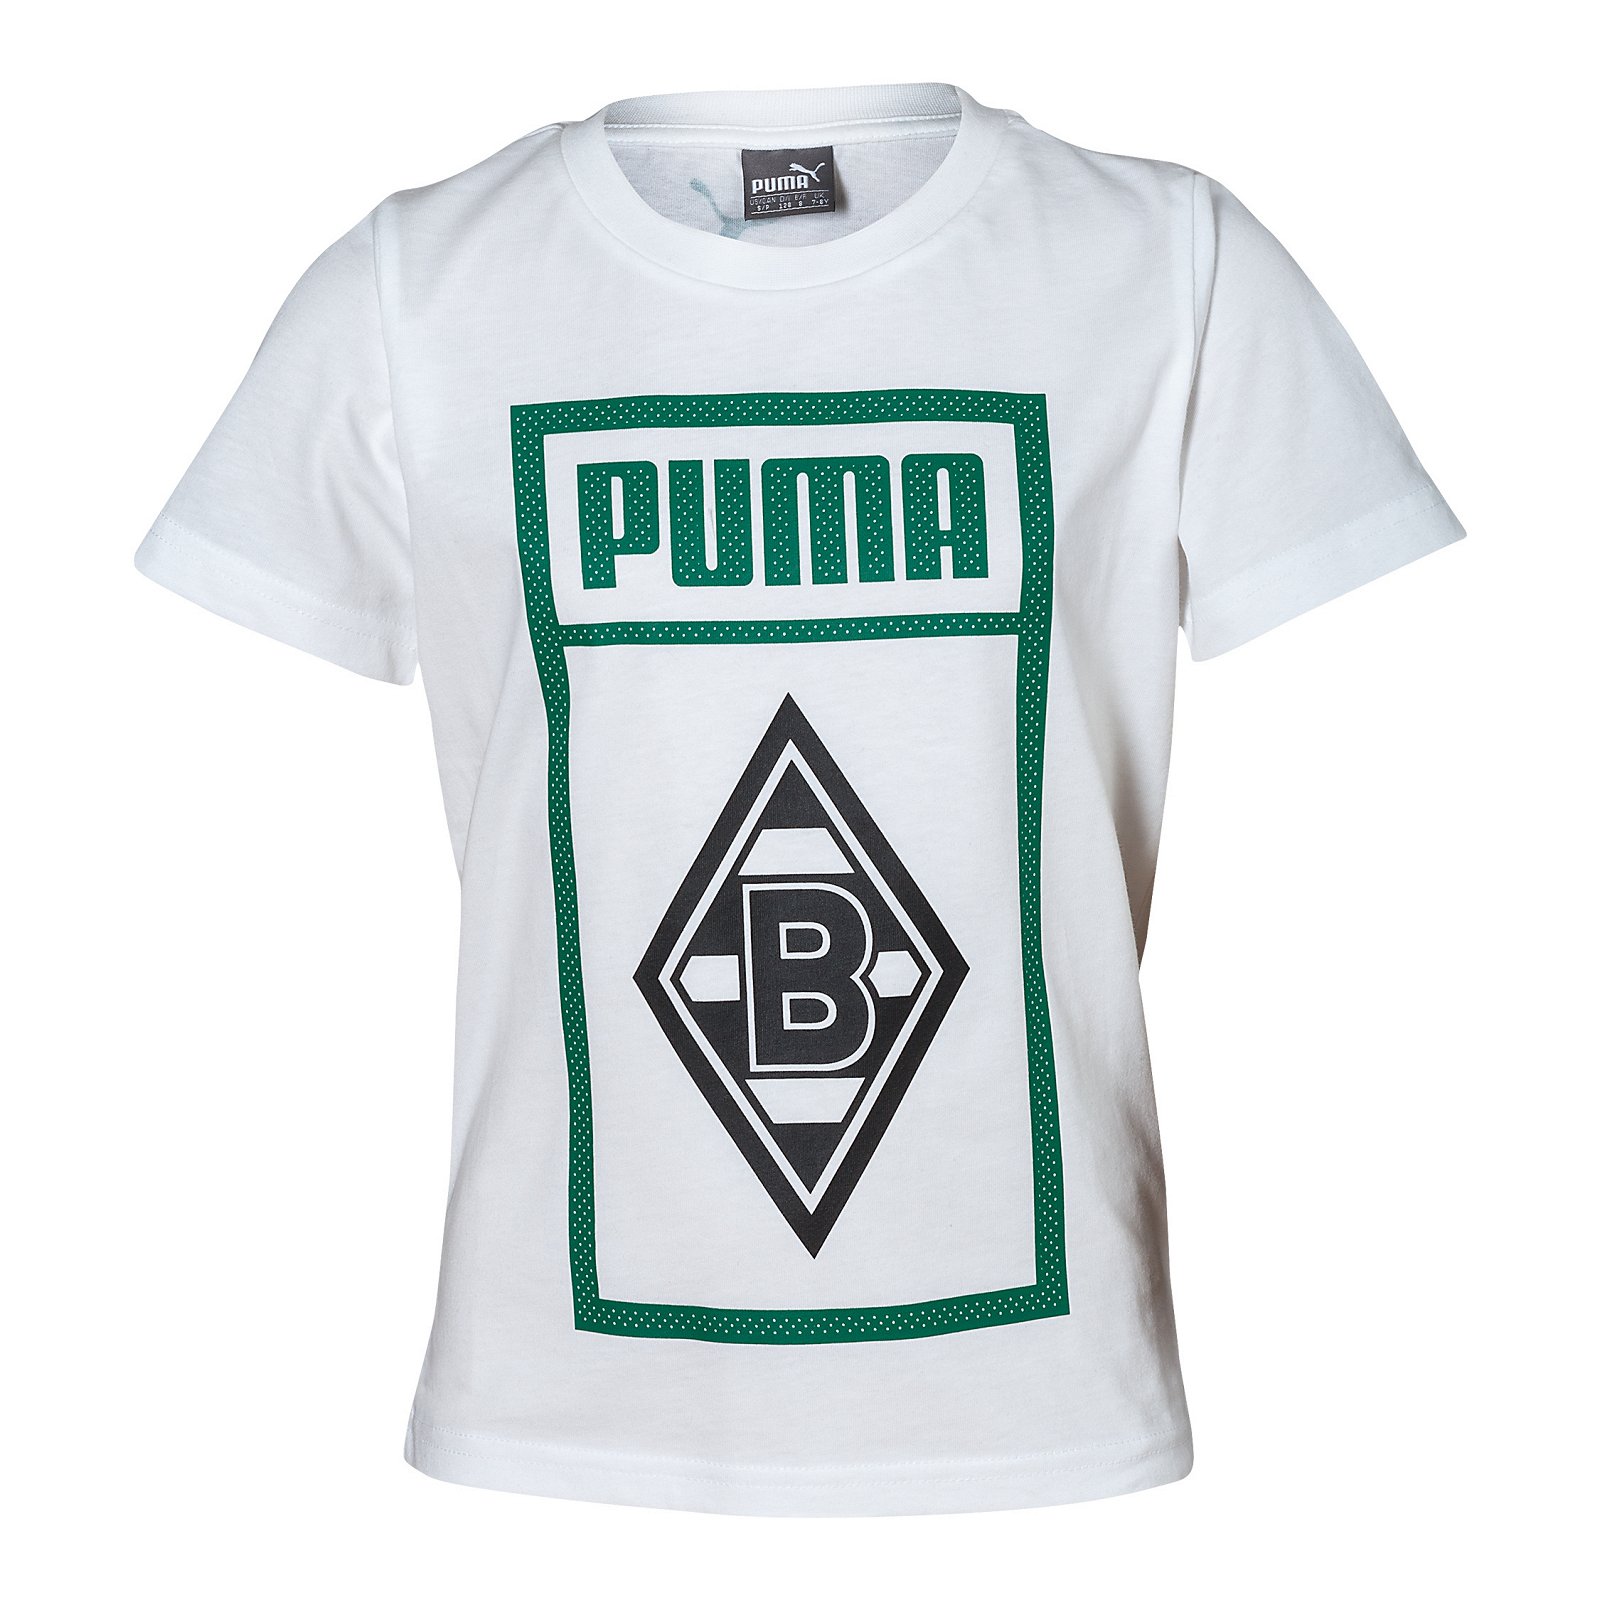 Puma BMG Shoe Tag Tee T-Shirt Herren Borussia Mönchengladbach weiss 754164 03